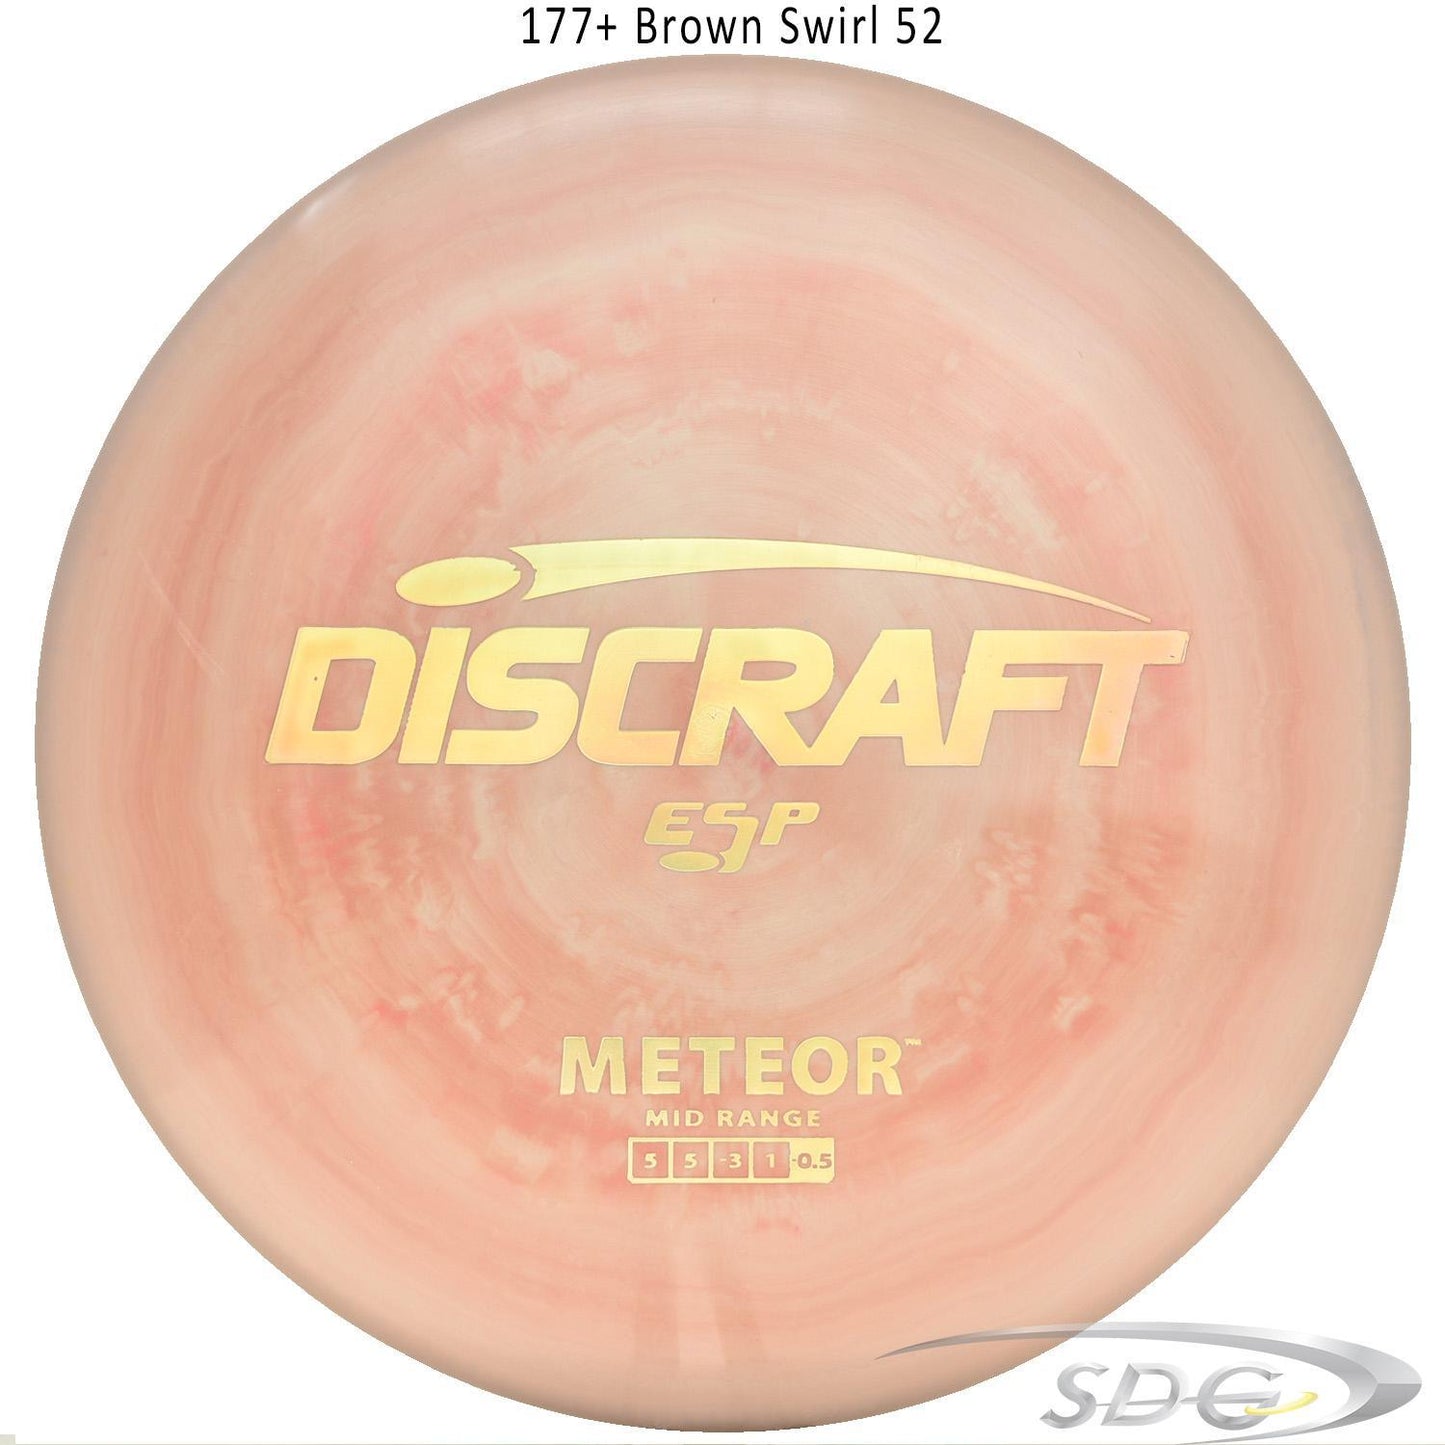 discraft-esp-meteor-disc-golf-mid-range 177+ Brown Swirl 52 